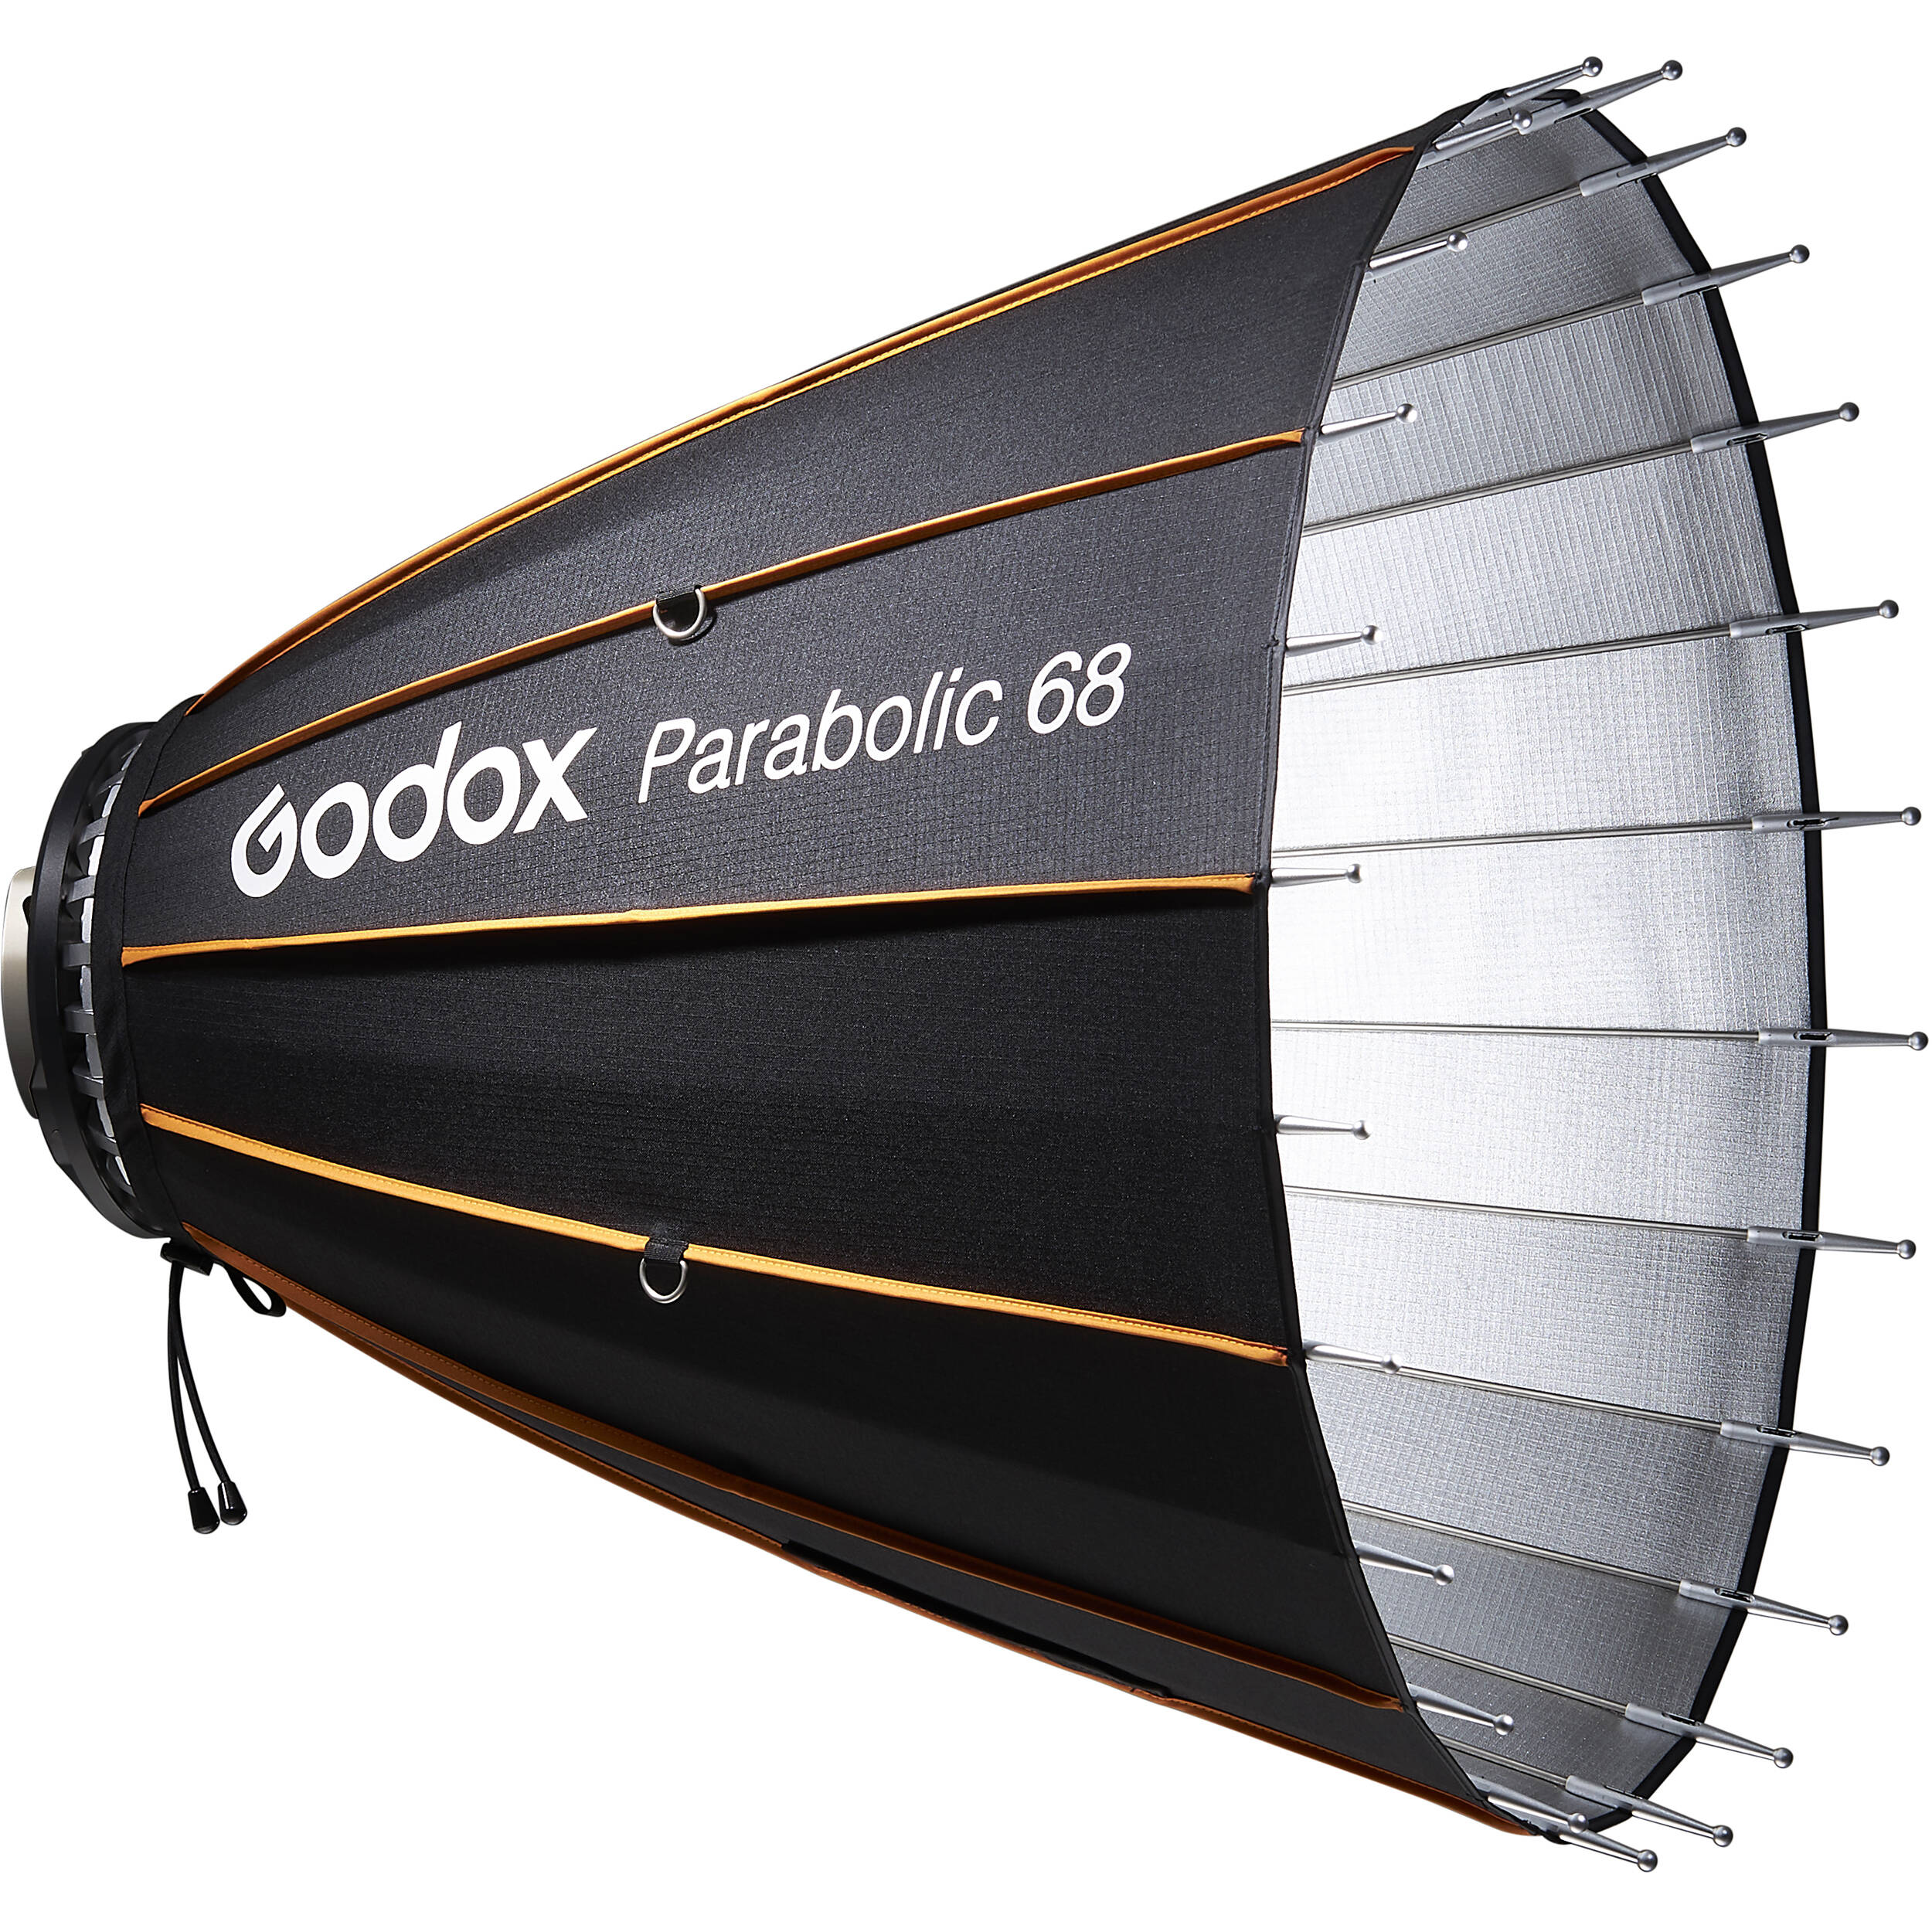    Godox Parabolic P68Kit    Ultra-mart